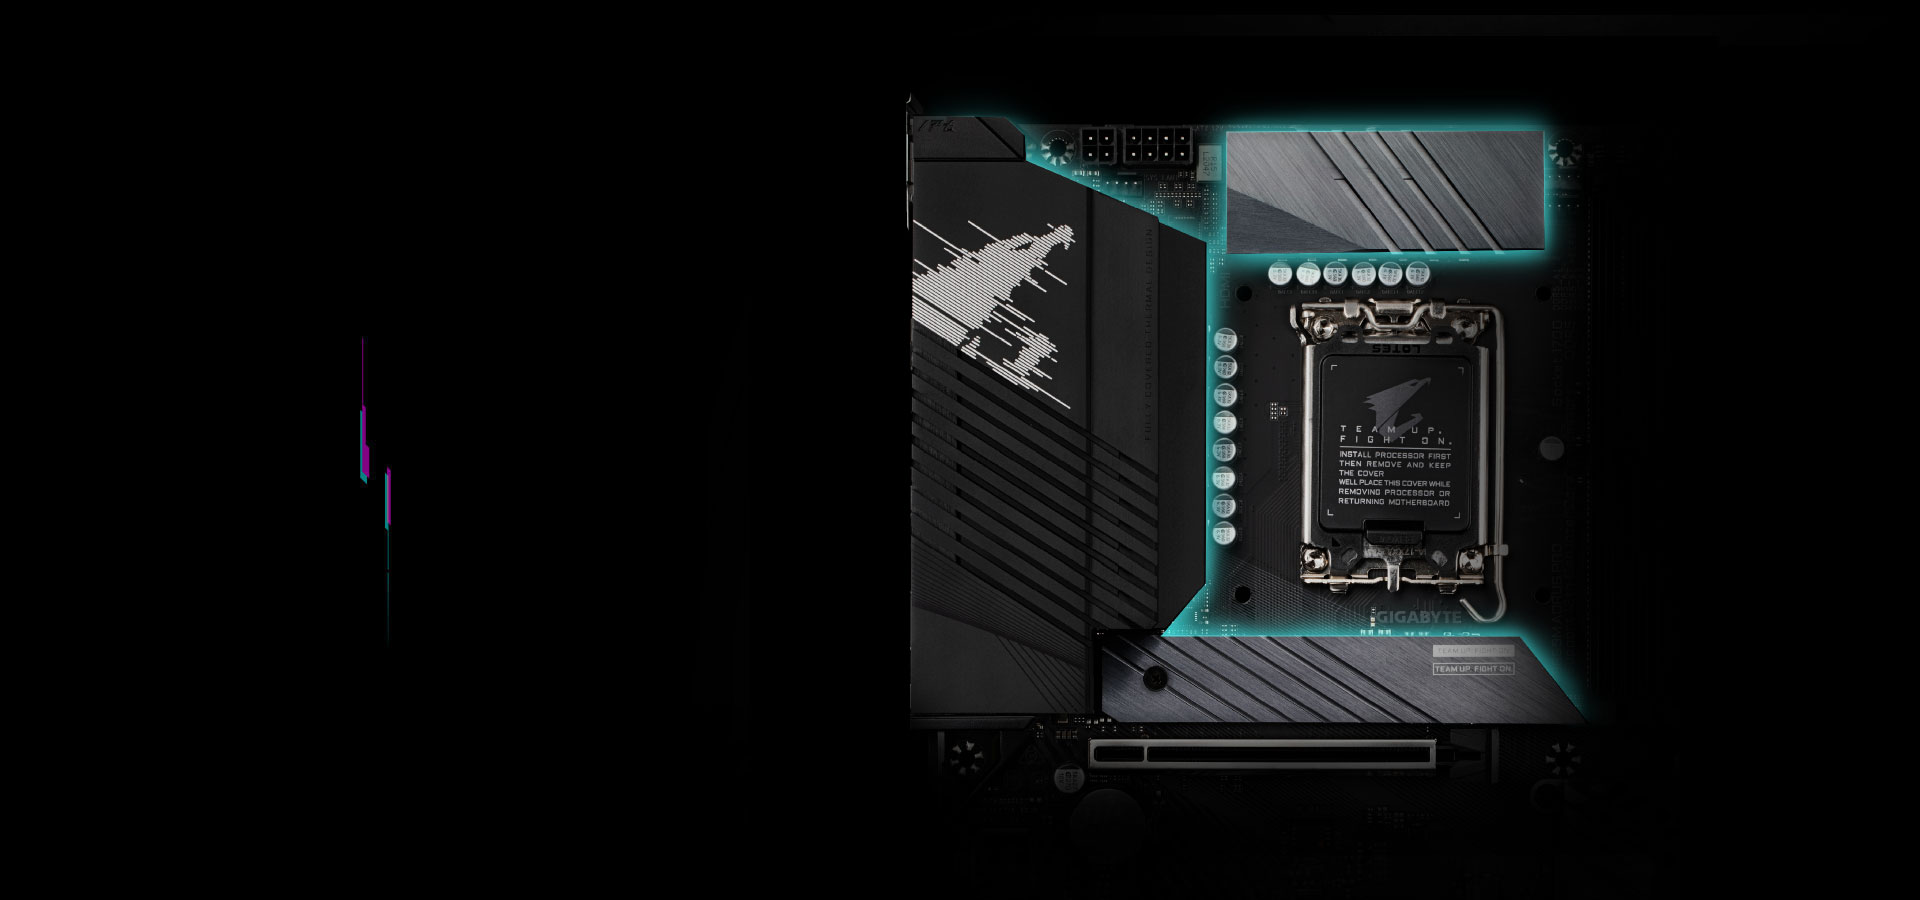 B660M AORUS PRO DDR4 (rev. 1.0) Key Features | Motherboard